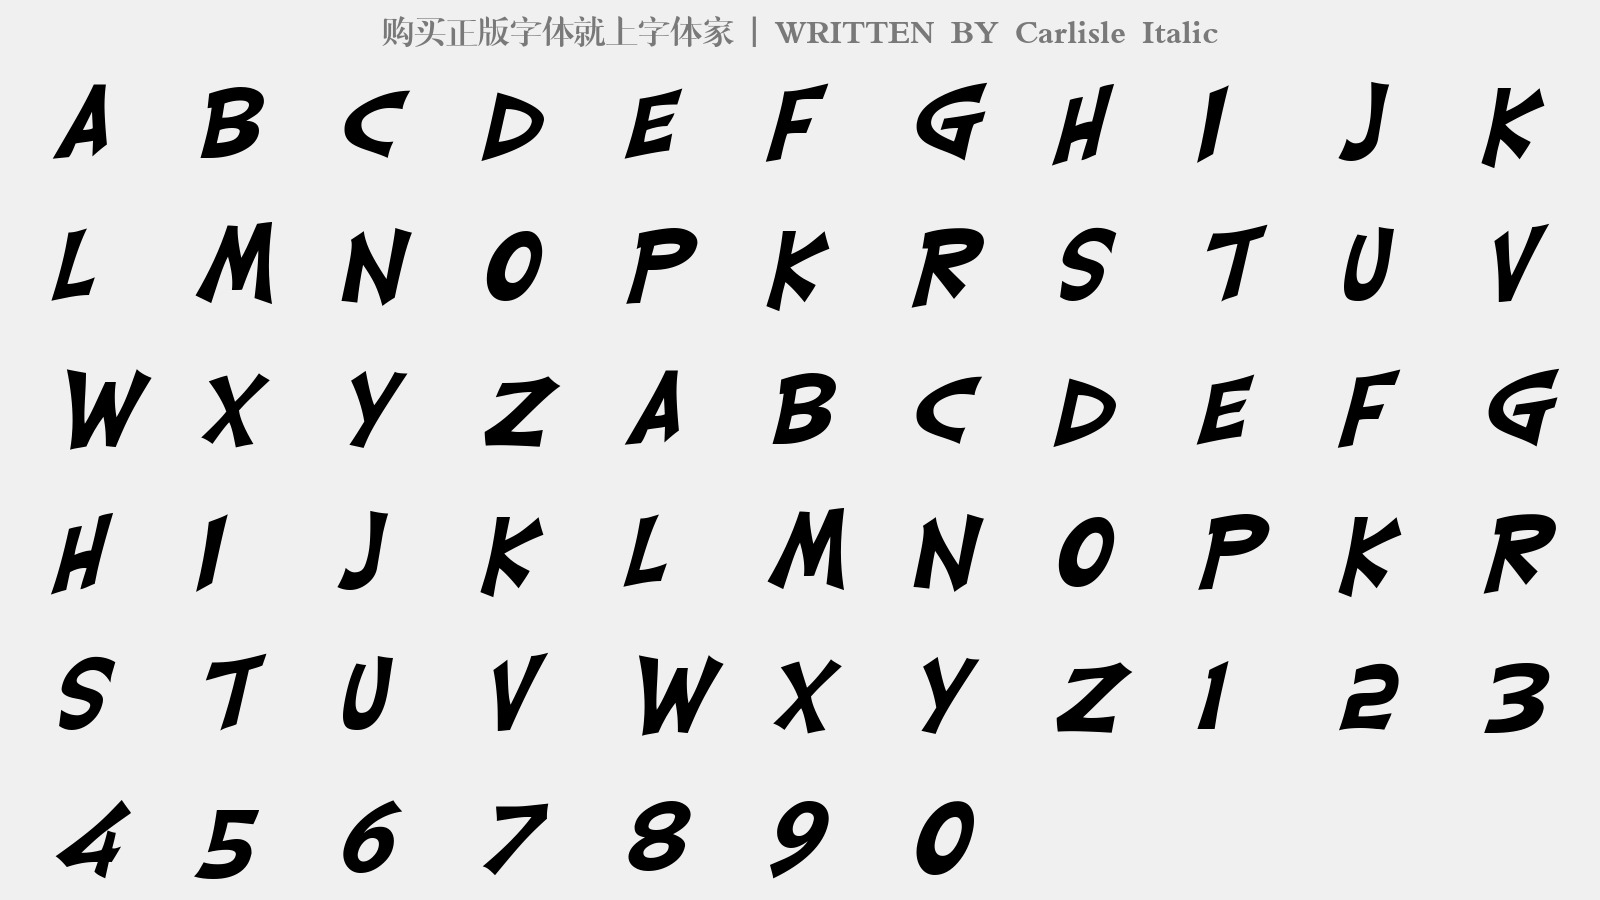 Carlisle Italic - 大写字母/小写字母/数字